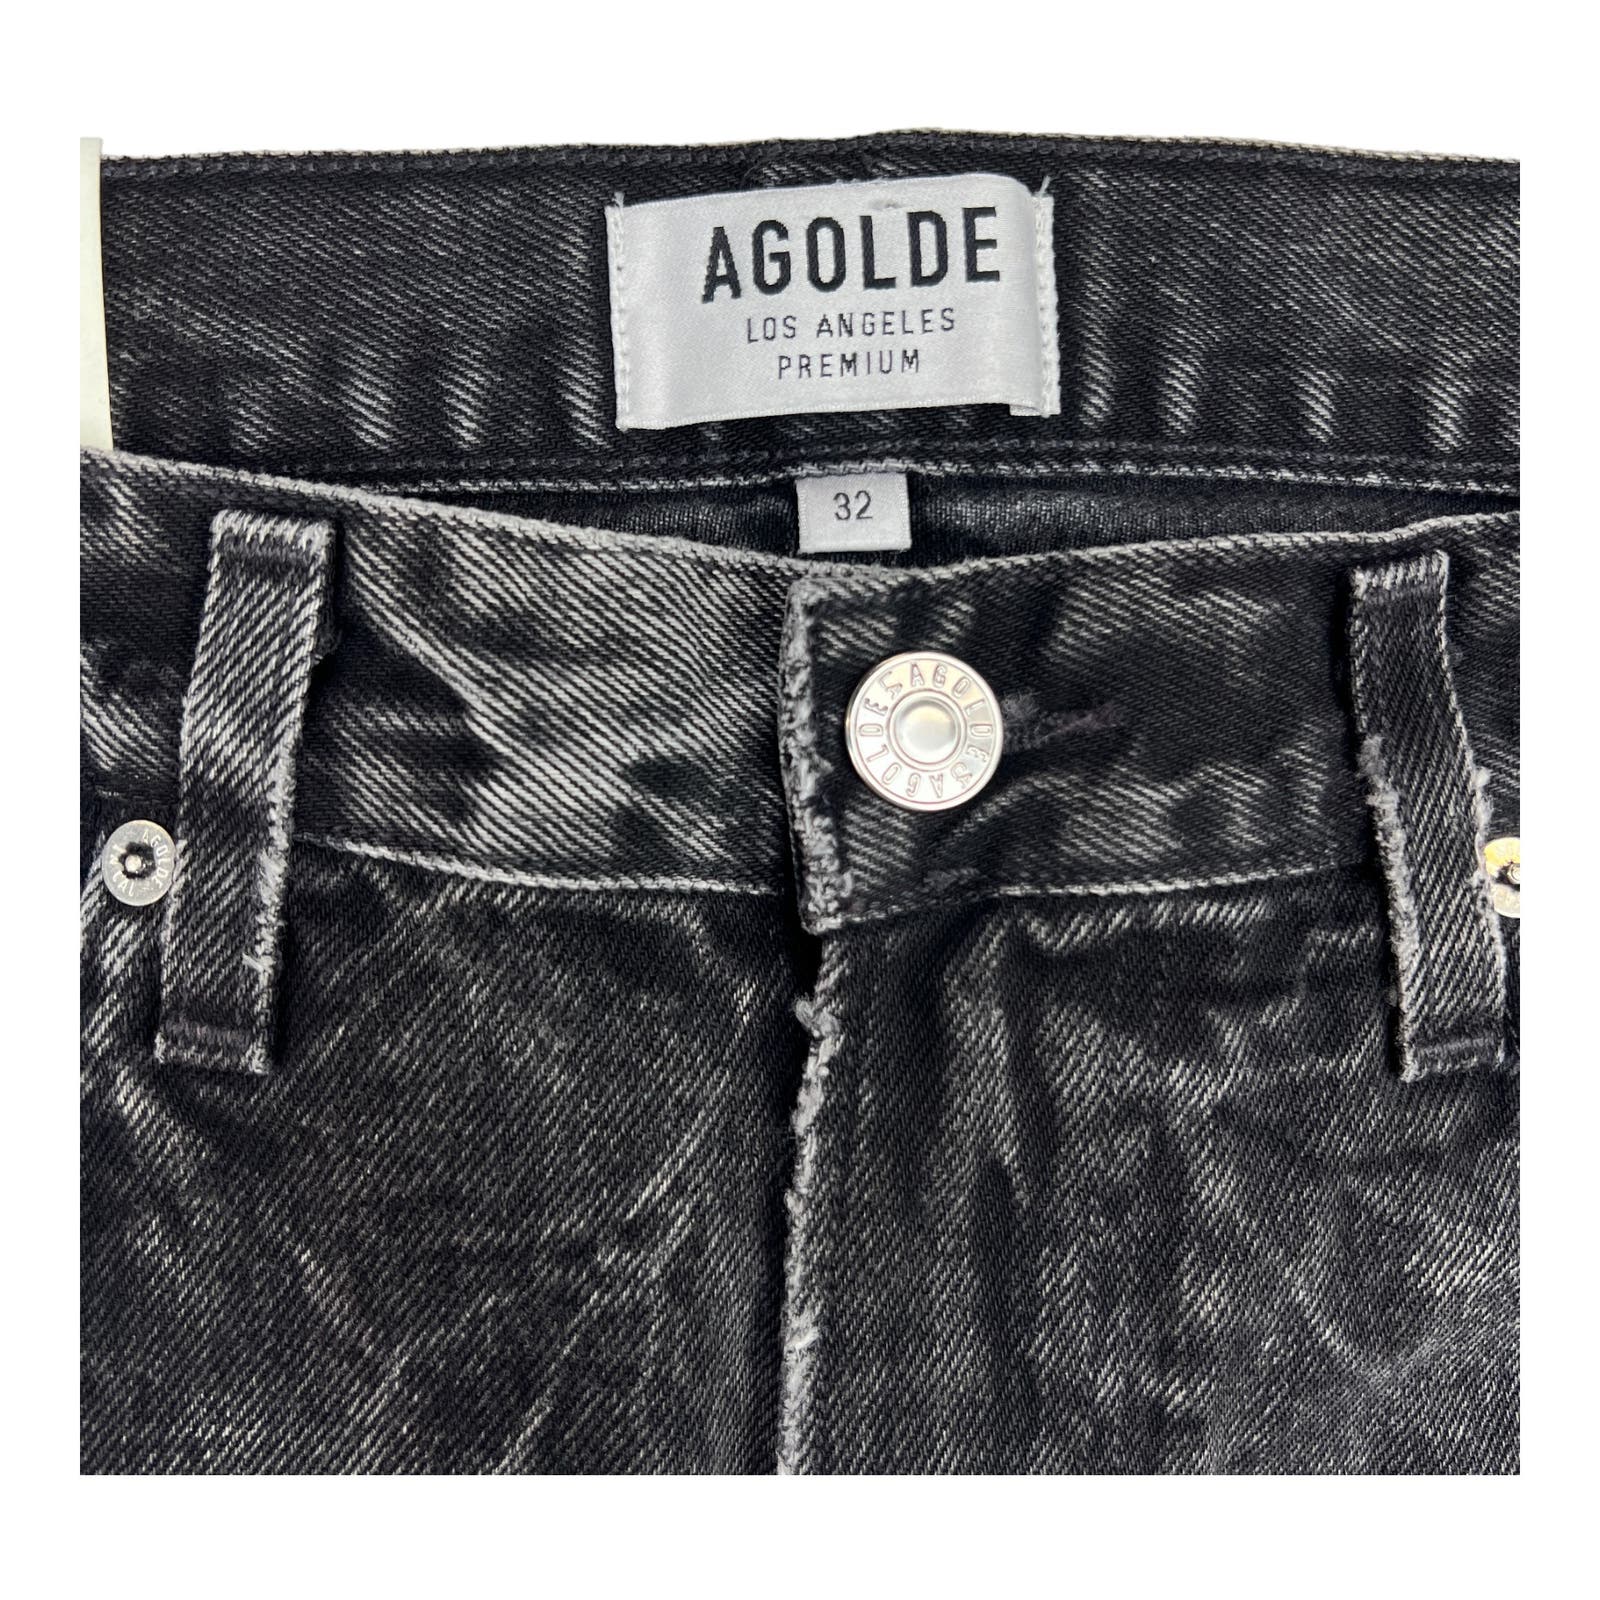 Agolde Men Jeans US 32 Tapered Slim Fit Denim Casual Cotton